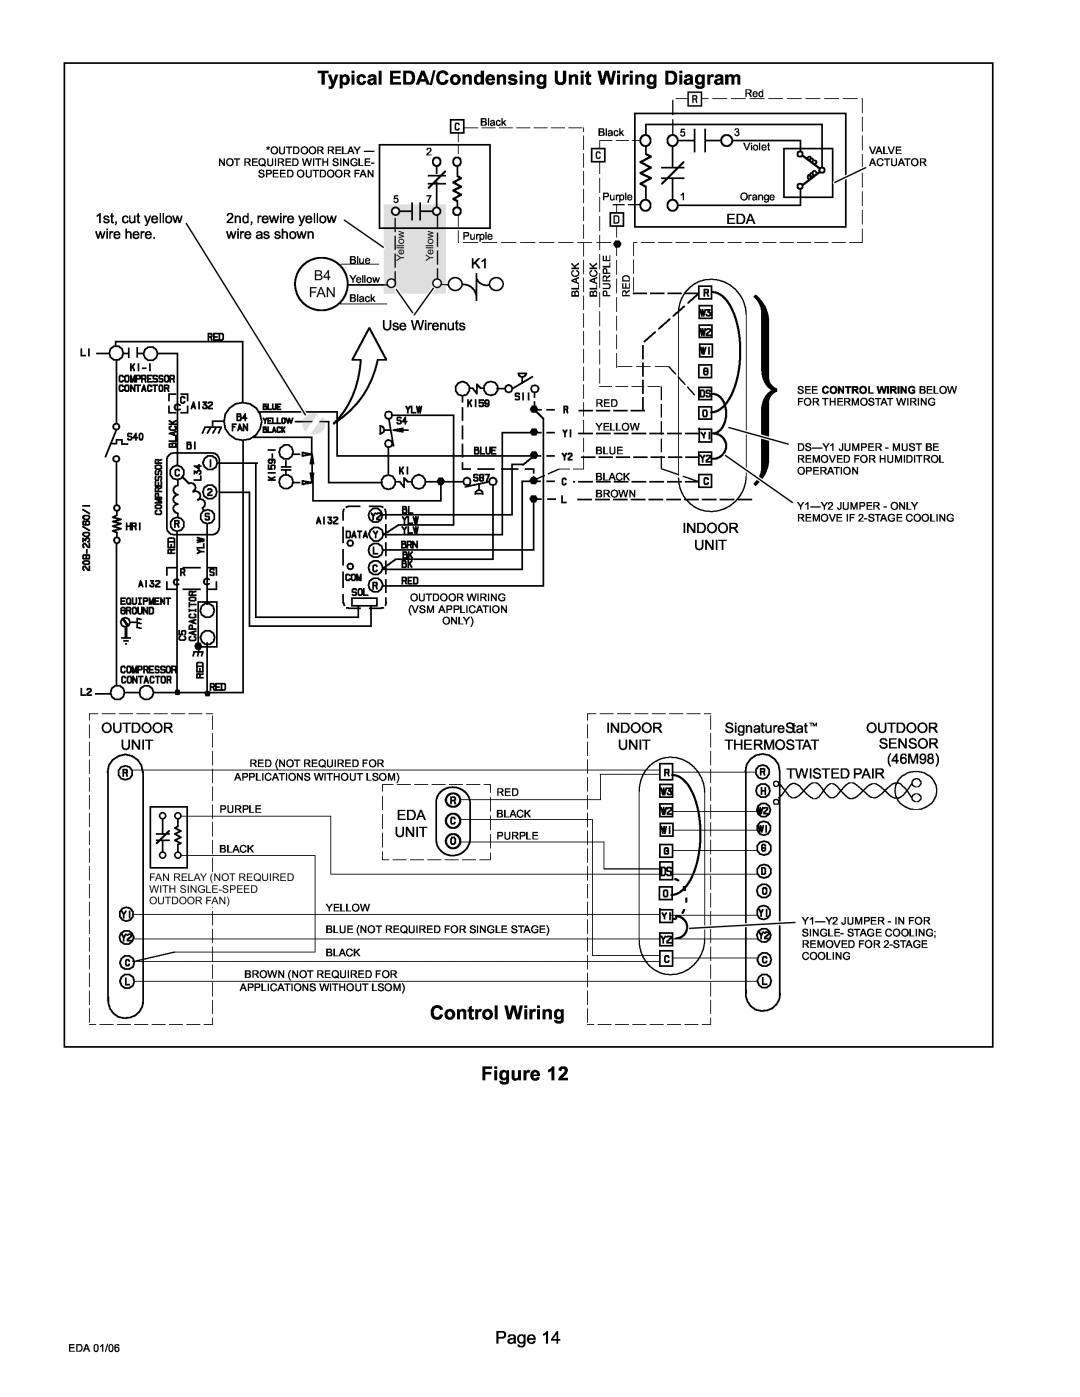 Lennox International Inc 505, 021 Typical EDA/Condensing Unit Wiring Diagram, Control Wiring Figure 